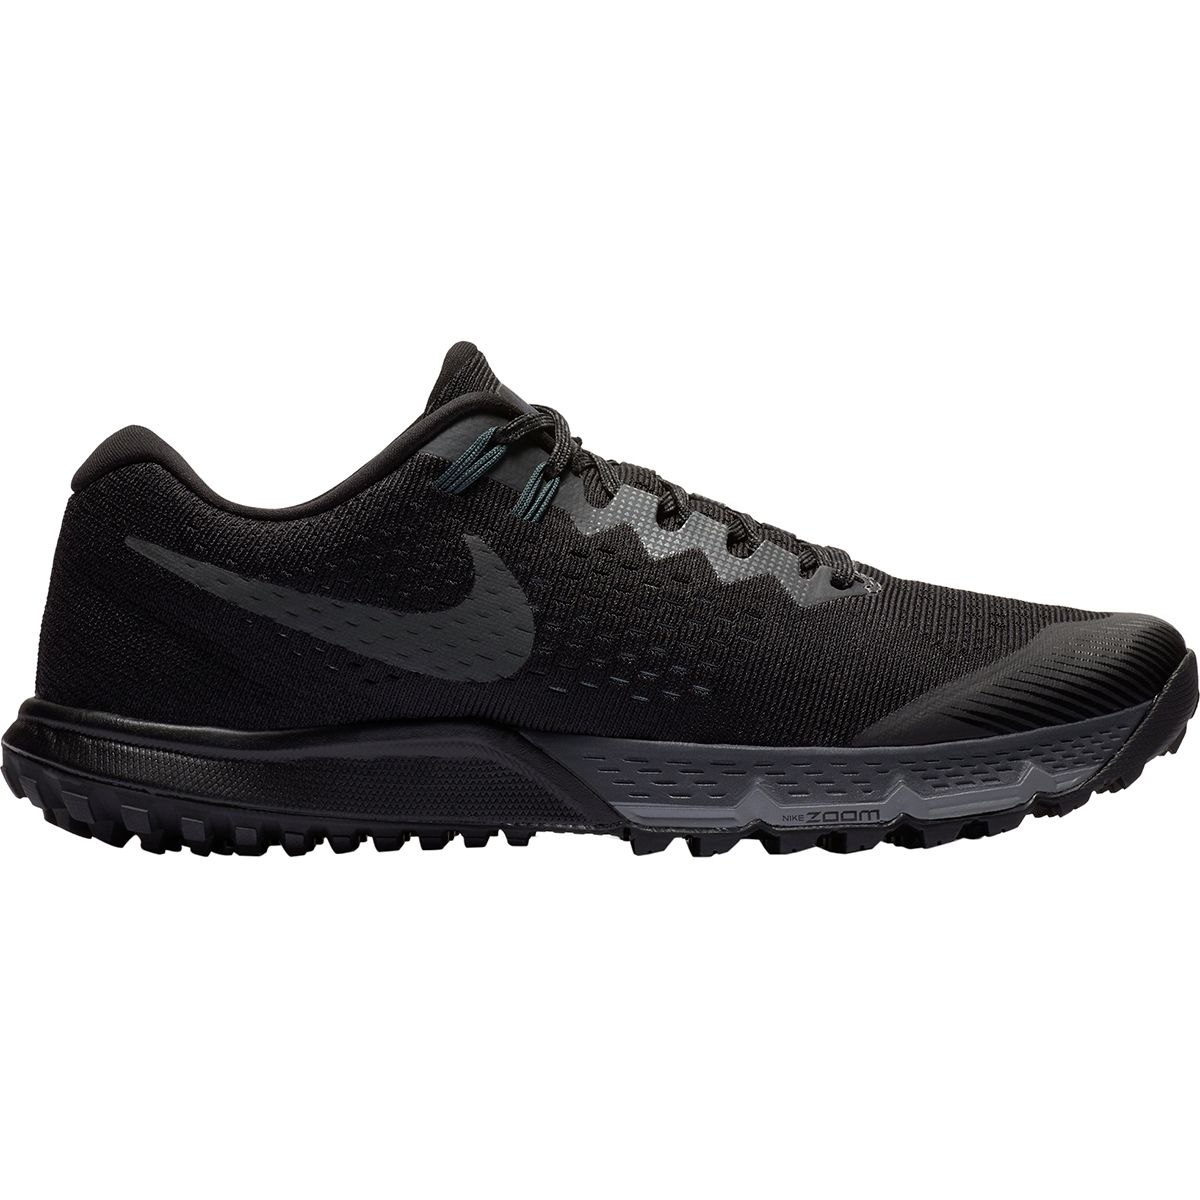 espectro para donar cuatro veces Nike Air Zoom Terra Kiger 4 Trail Running Shoe - Men's - Footwear